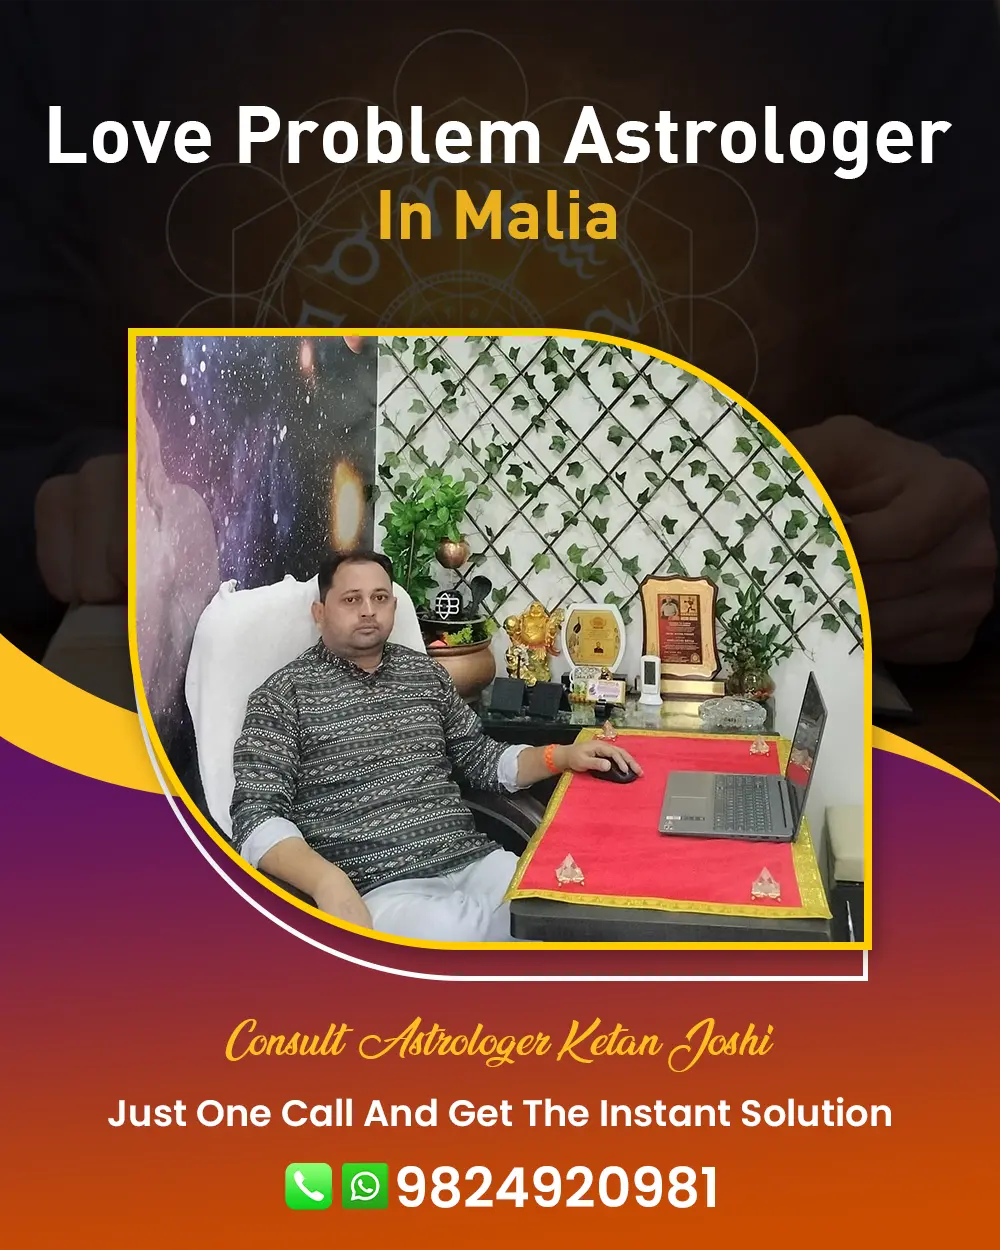 Love Problem Astrologer In Malia